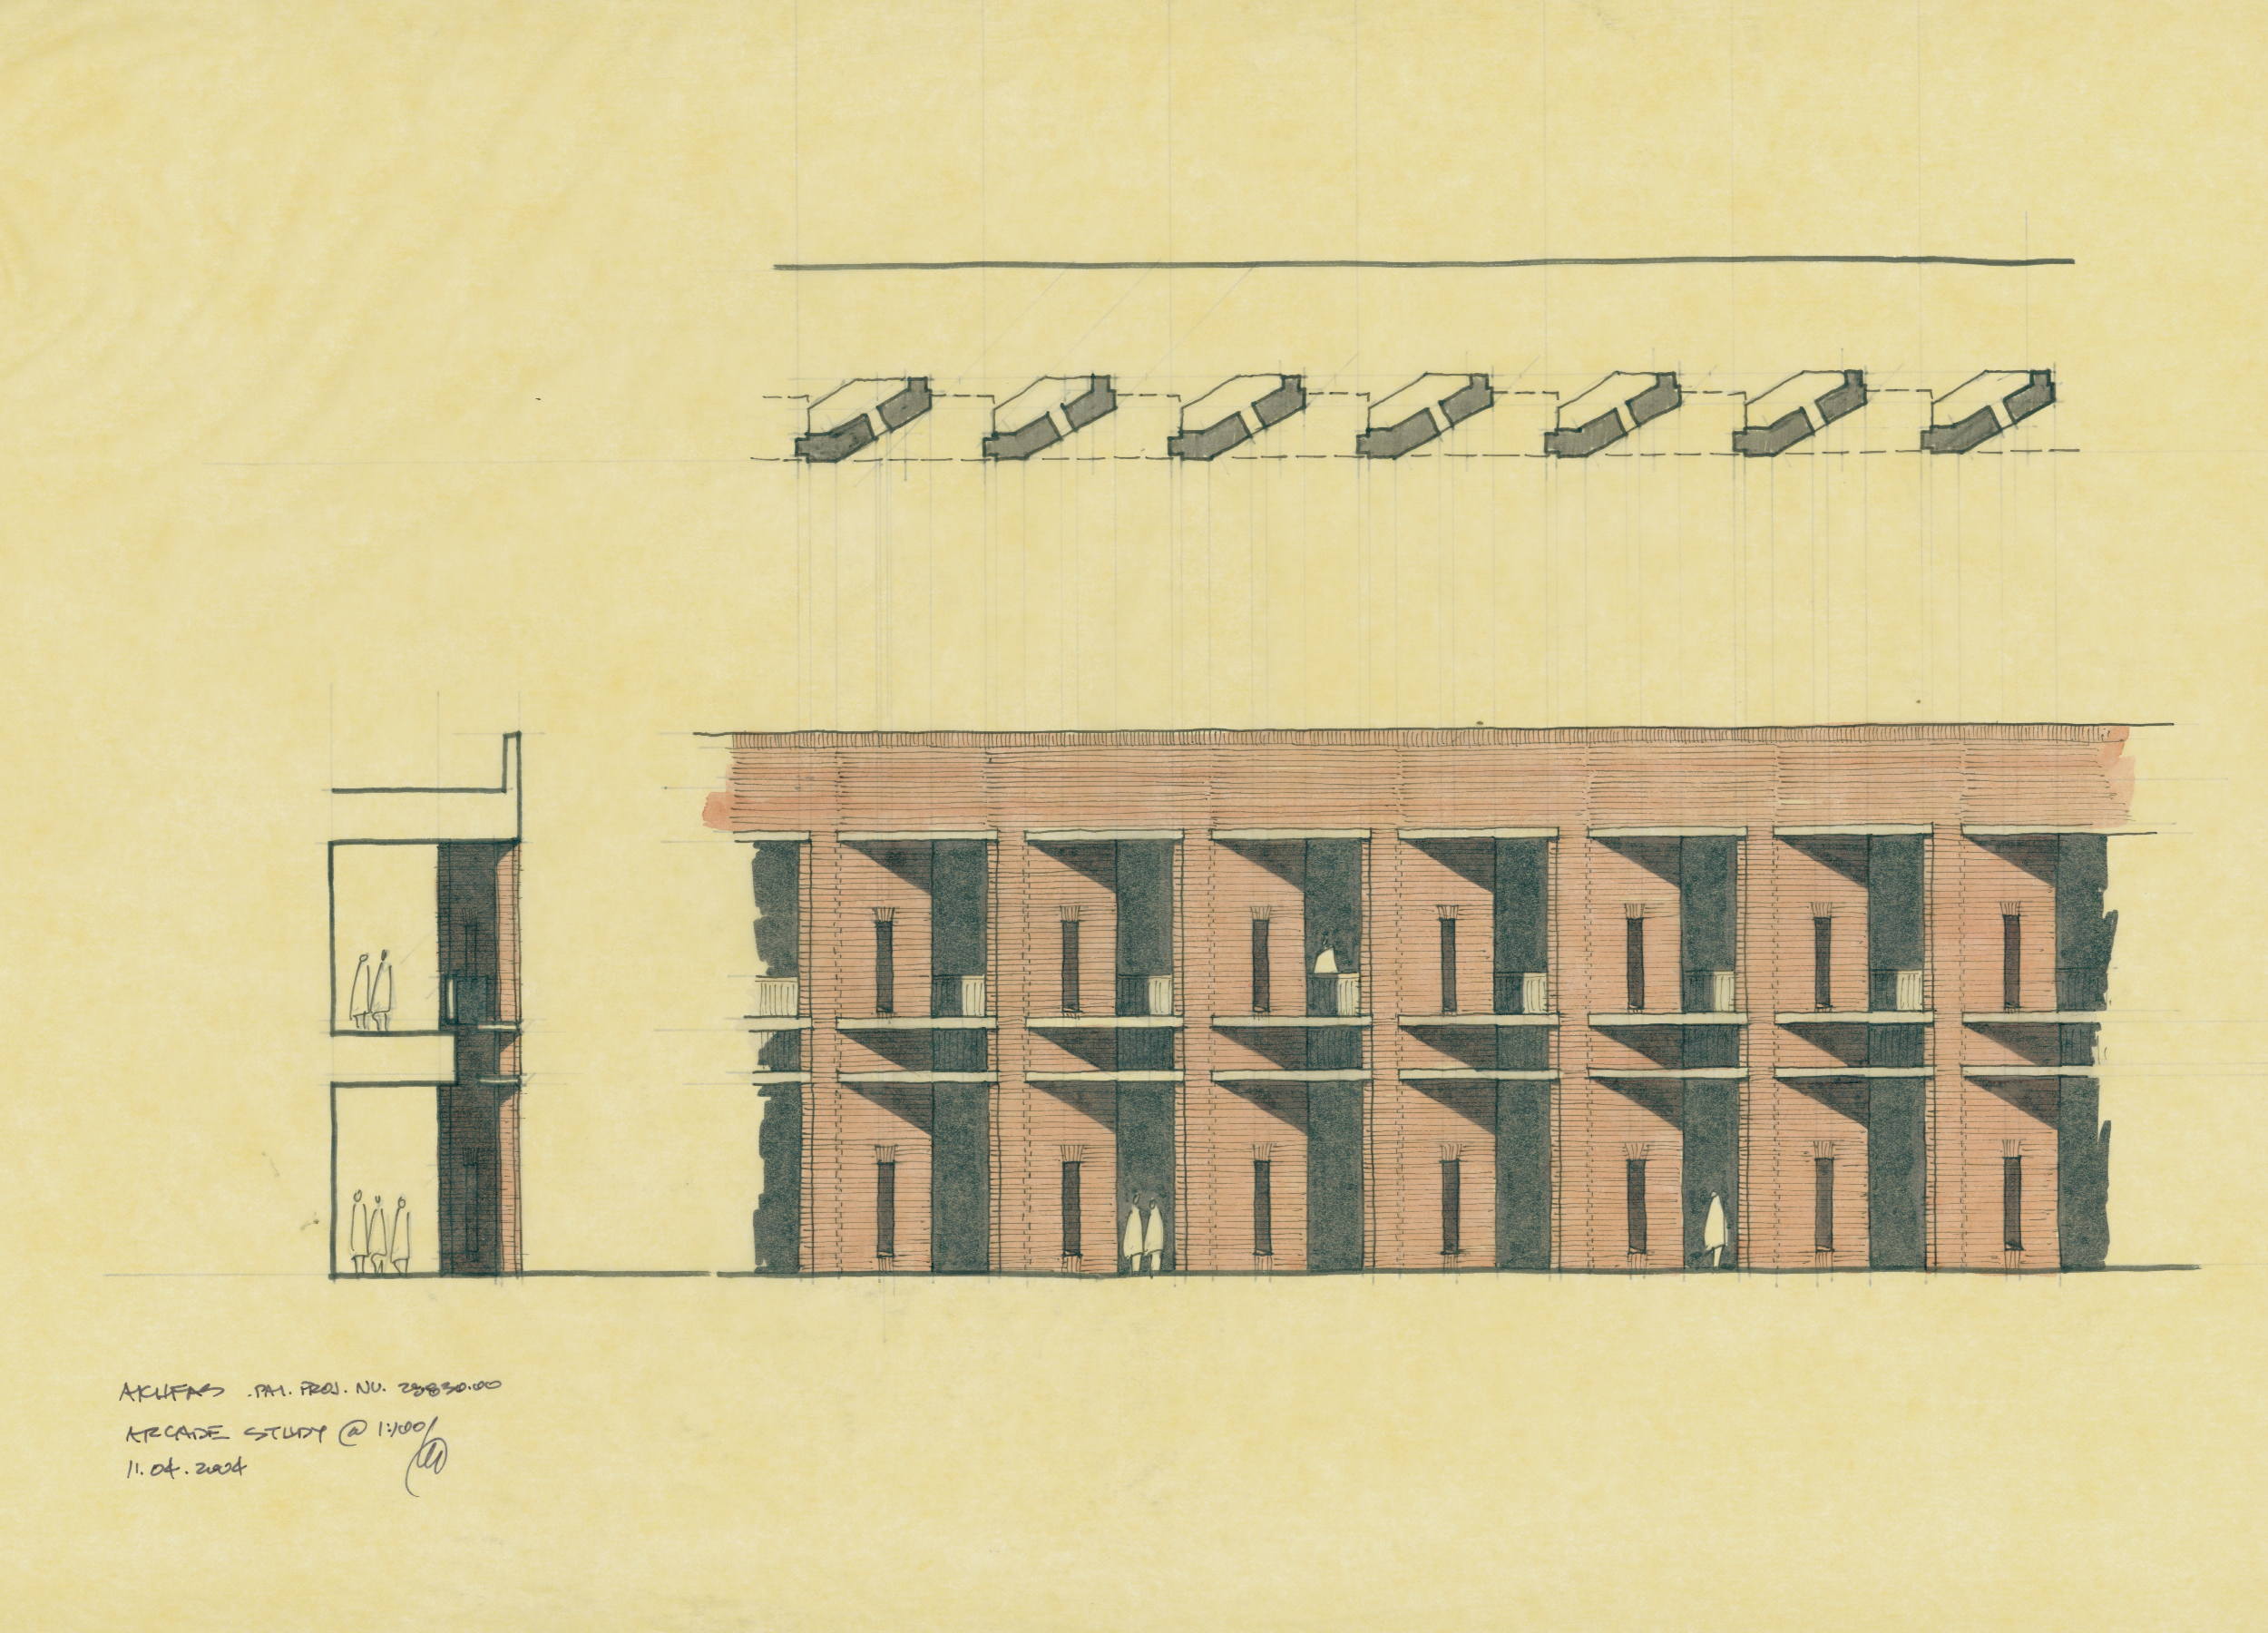 Sketch studies of verandas for Aga Khan University